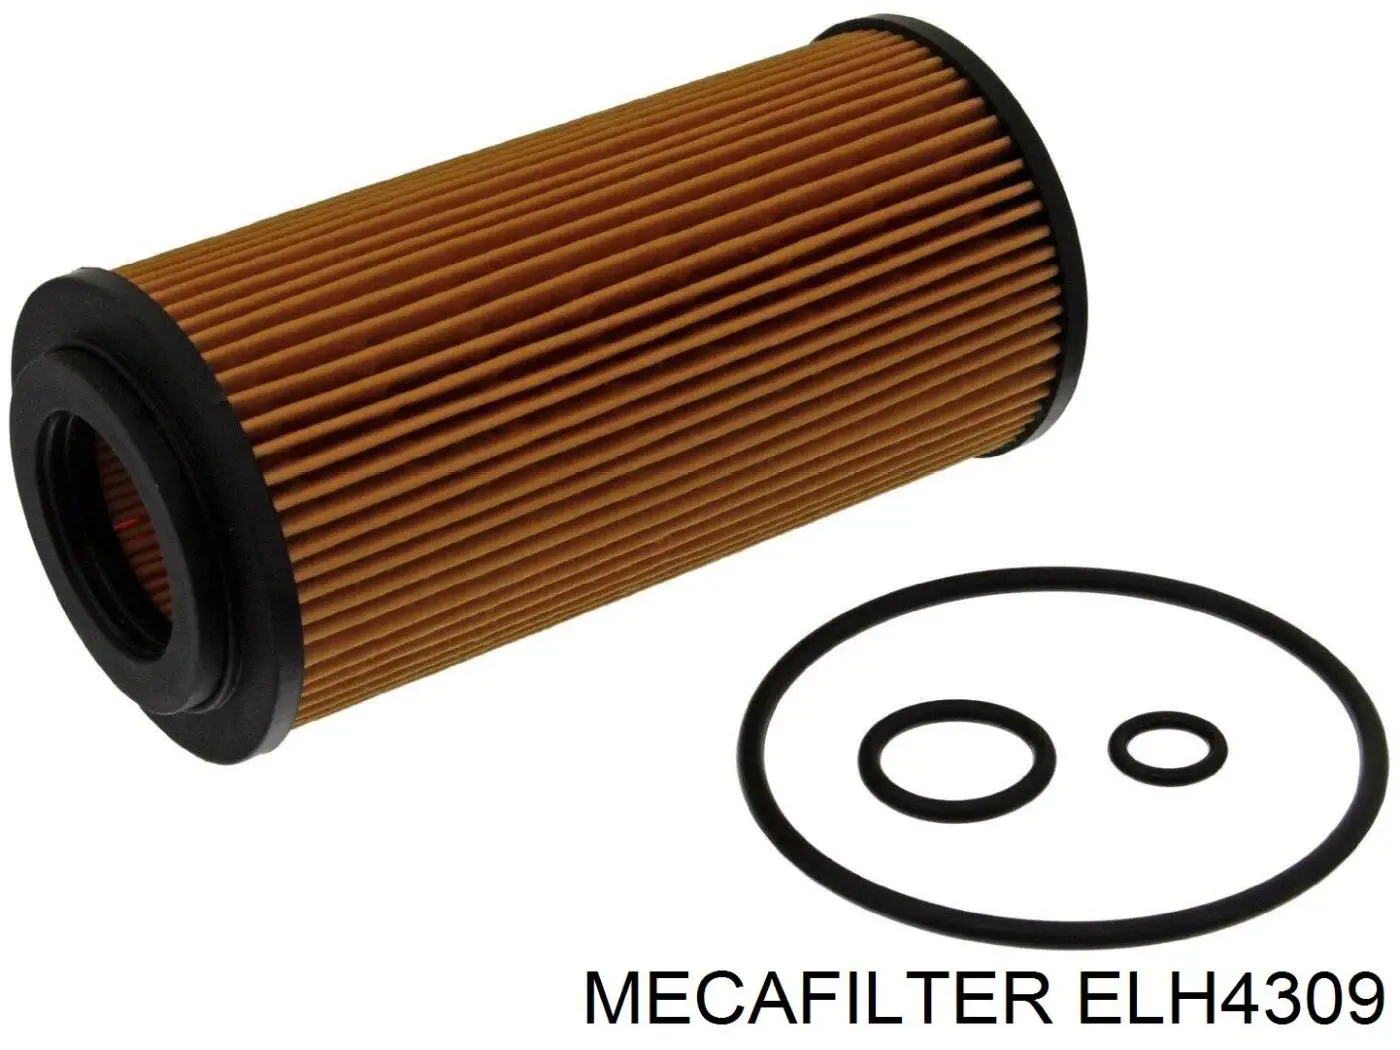 ELH4309 Mecafilter filtro de aceite